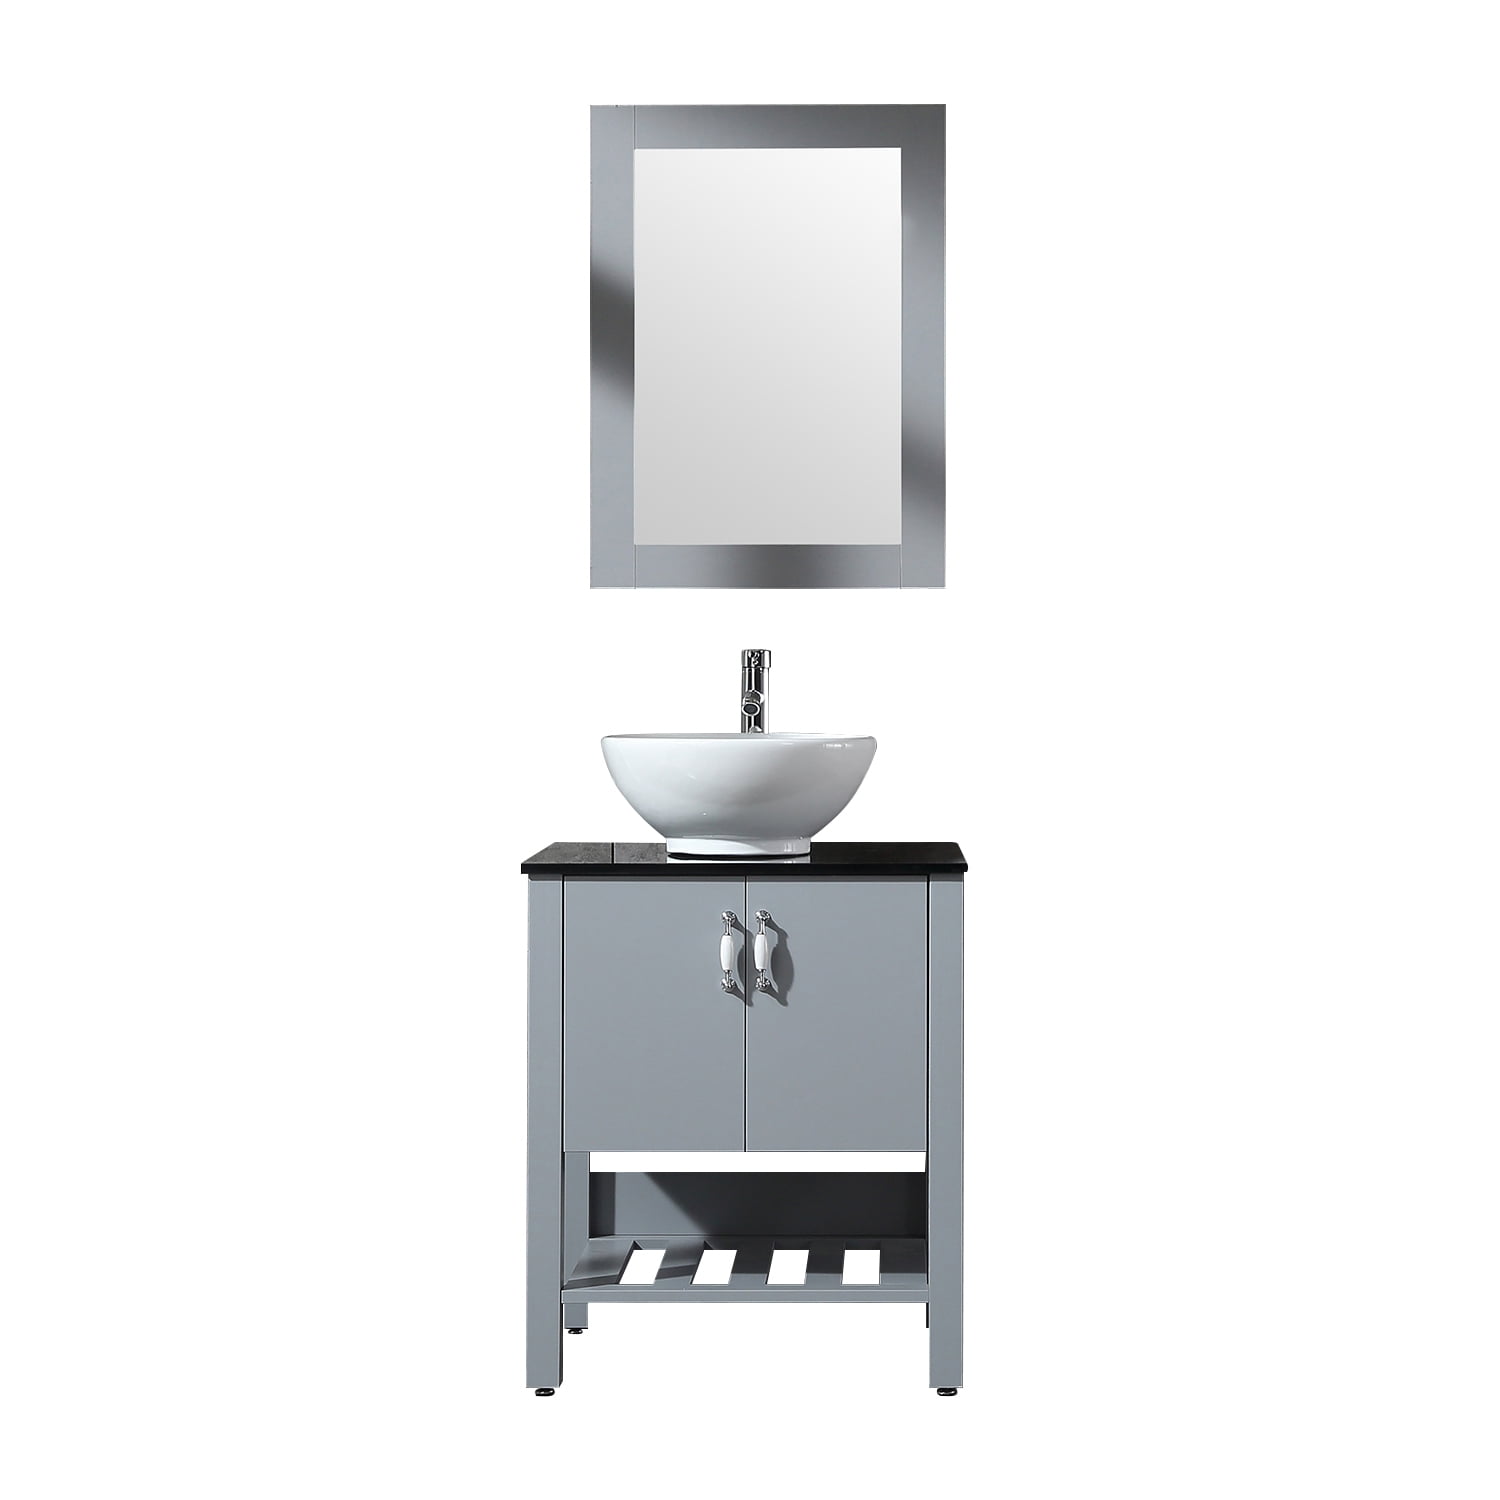 Wonline 25 Bathroom Vanity Cabinet W Mirror Glass Countertop Modern Gray Large Capacity Walmart Com Walmart Com